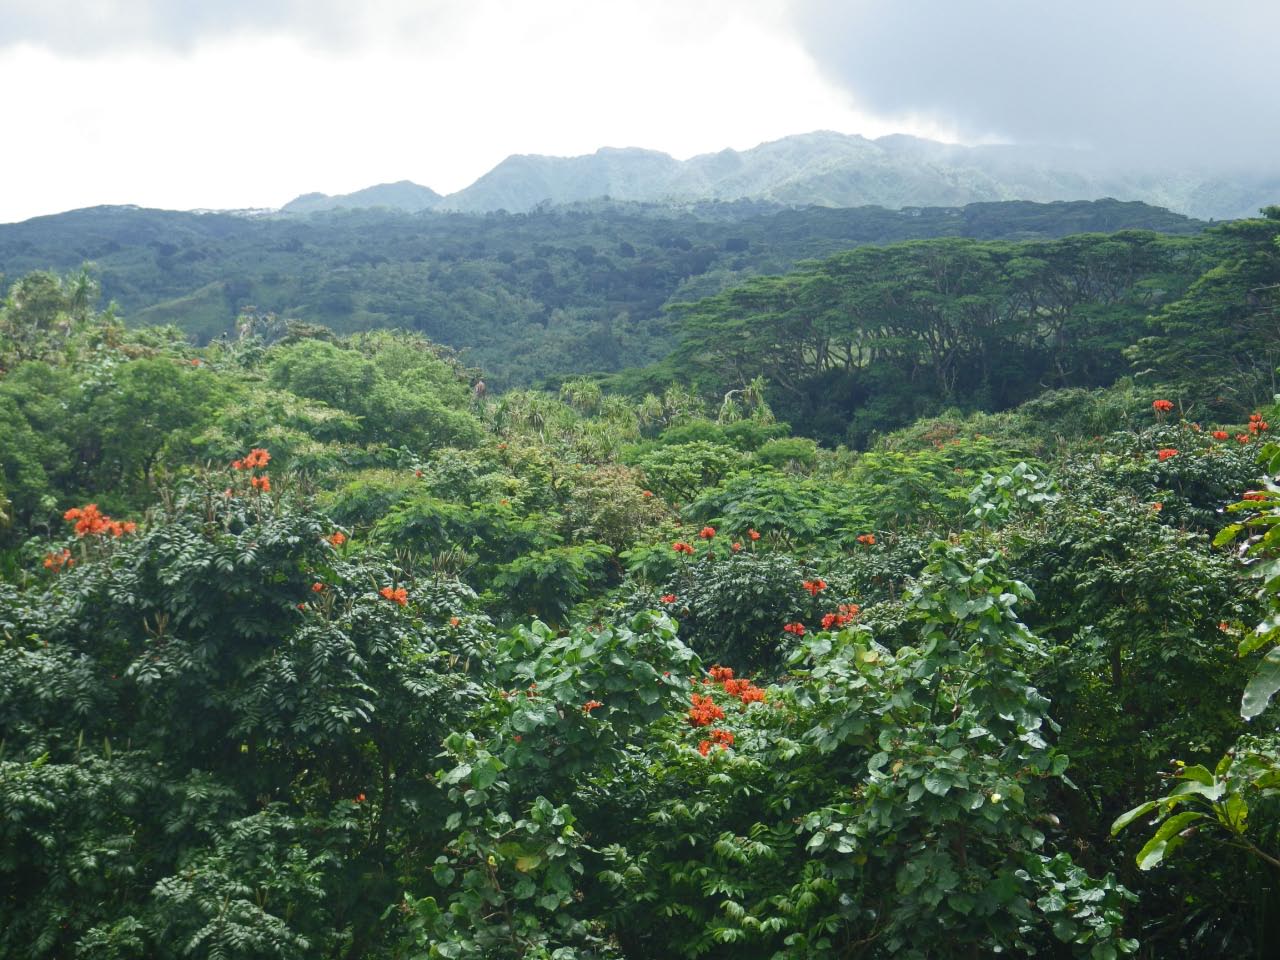 végétation luxuriante sur le plateau de Hiva Oa